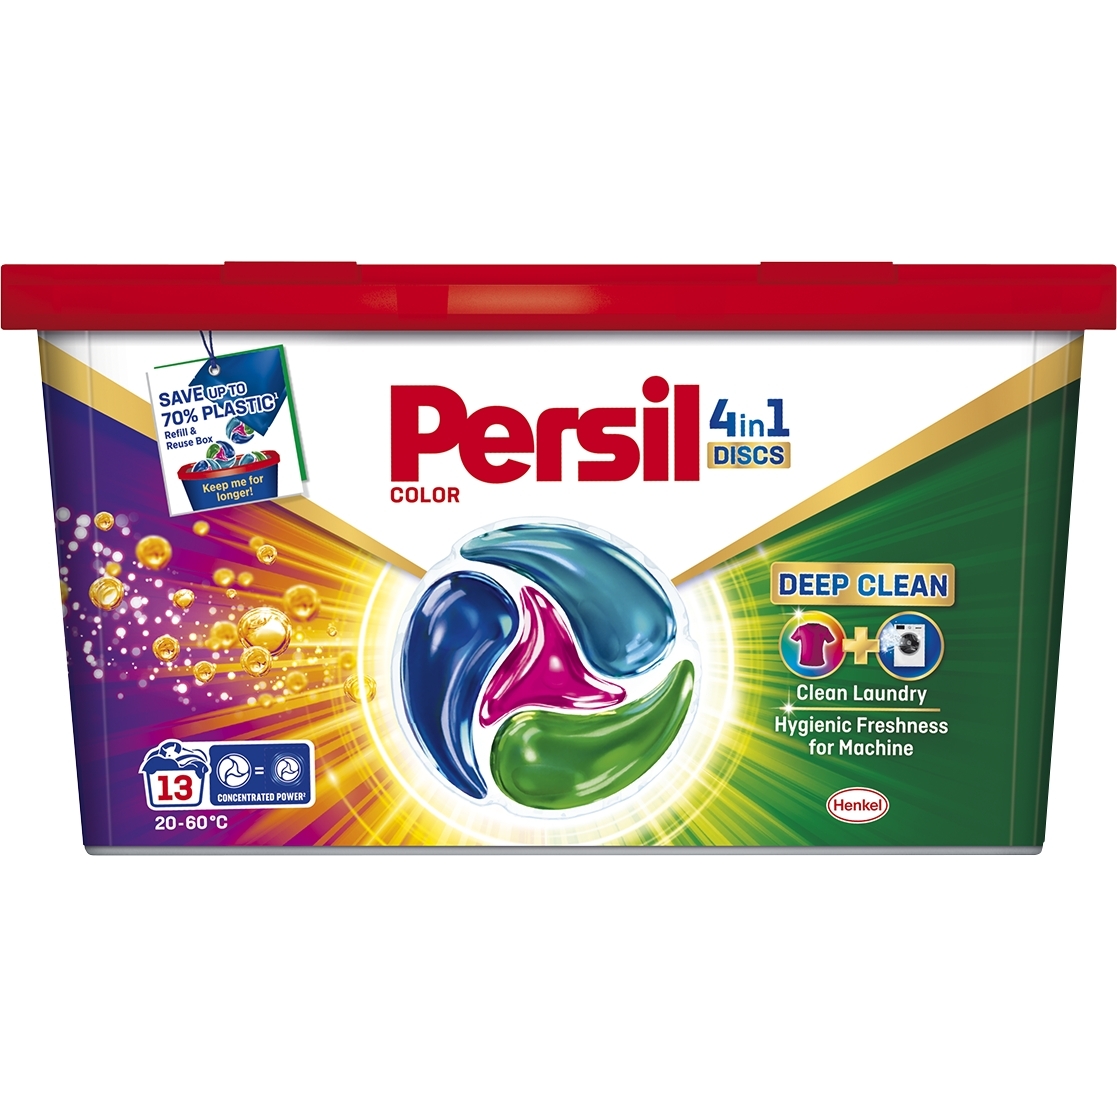 Photos - Laundry Detergent Persil Капсули  Color 4in1 Discs Deep Clean 13 циклів прання 